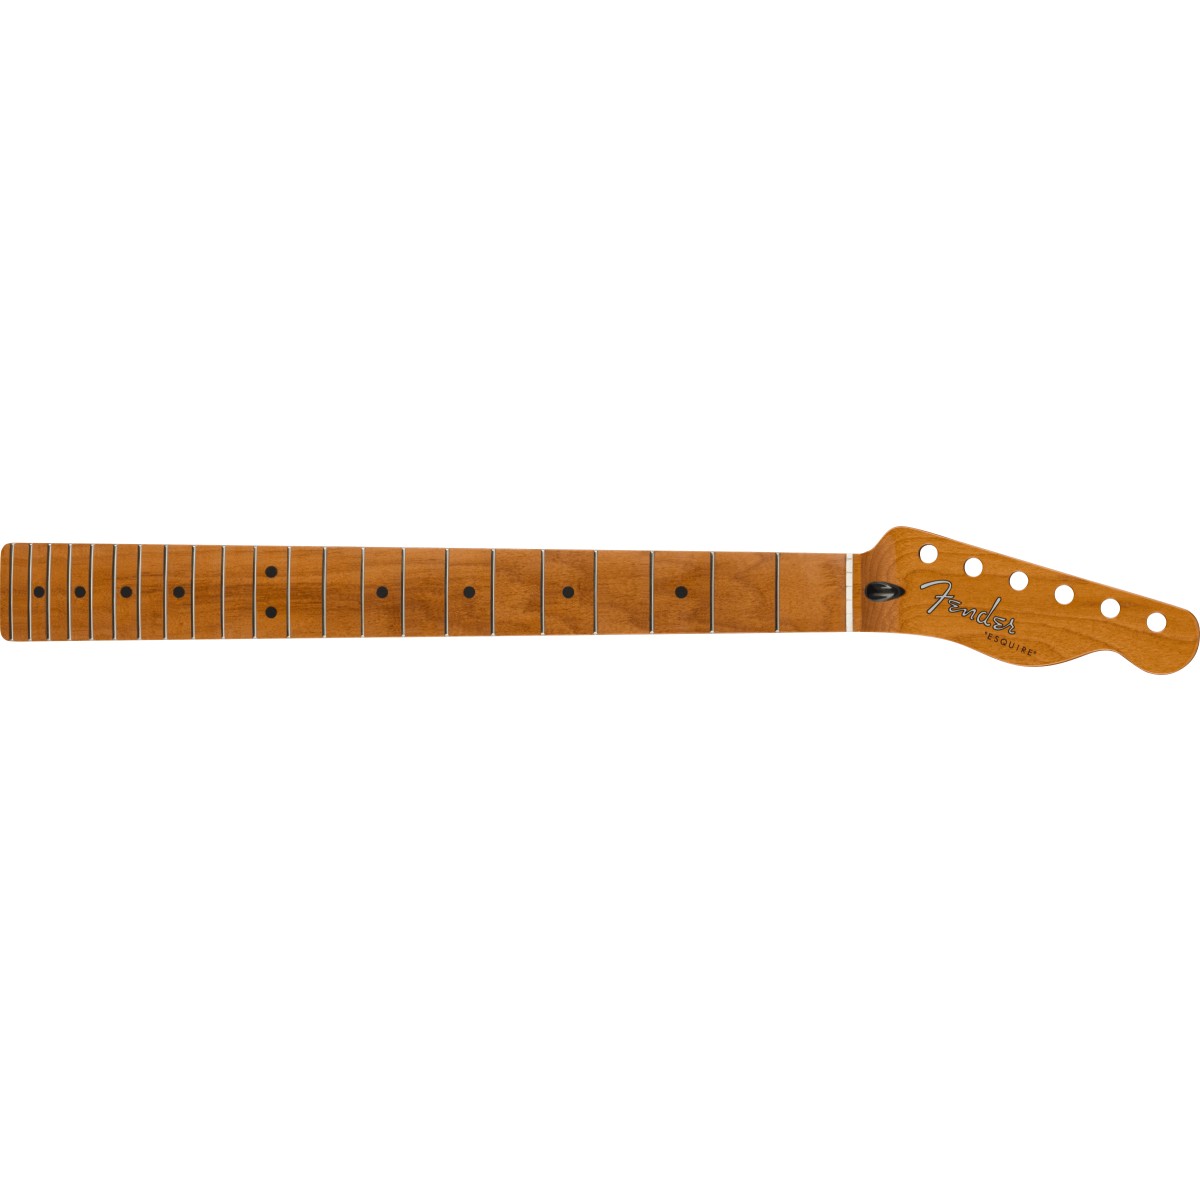 Manico Fender 50's Modified Esquire 22 Narrow Tall Frets 9.5" U Shape Roasted Maple 0990217920